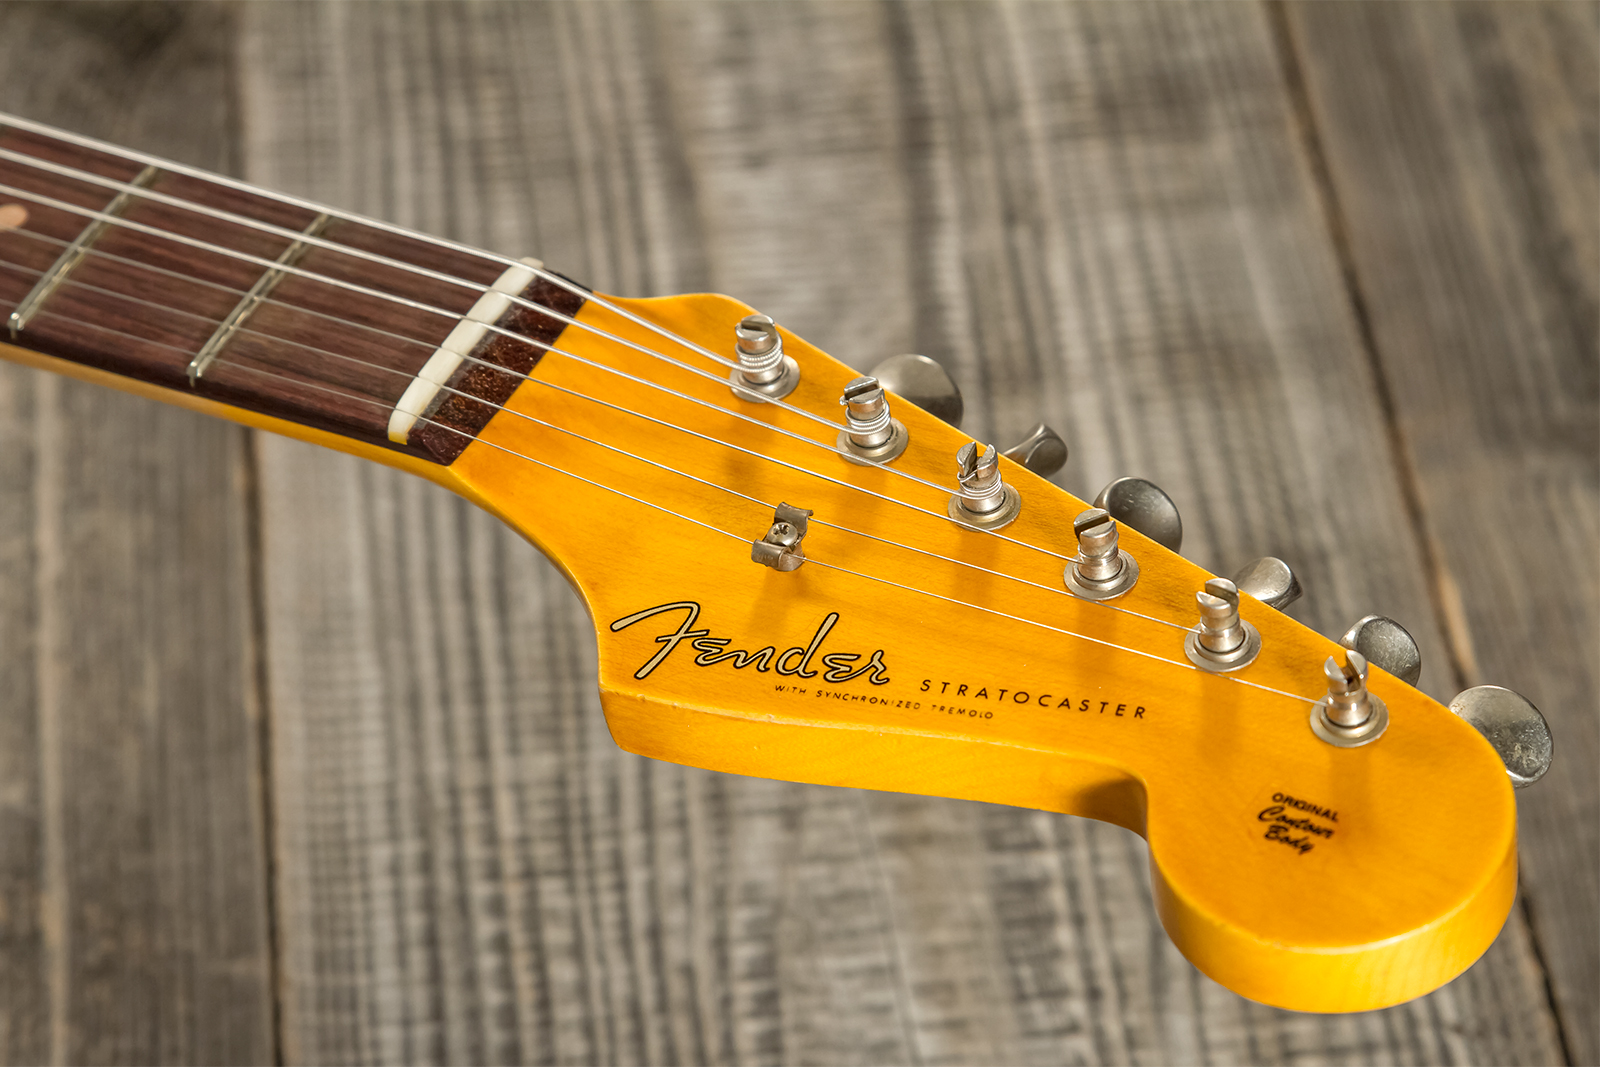 Fender Custom Shop Strat 1959 3s Trem Rw #cz570883 - Journeyman Relic Teal Green Metallic - Guitare Électrique Forme Str - Variation 6